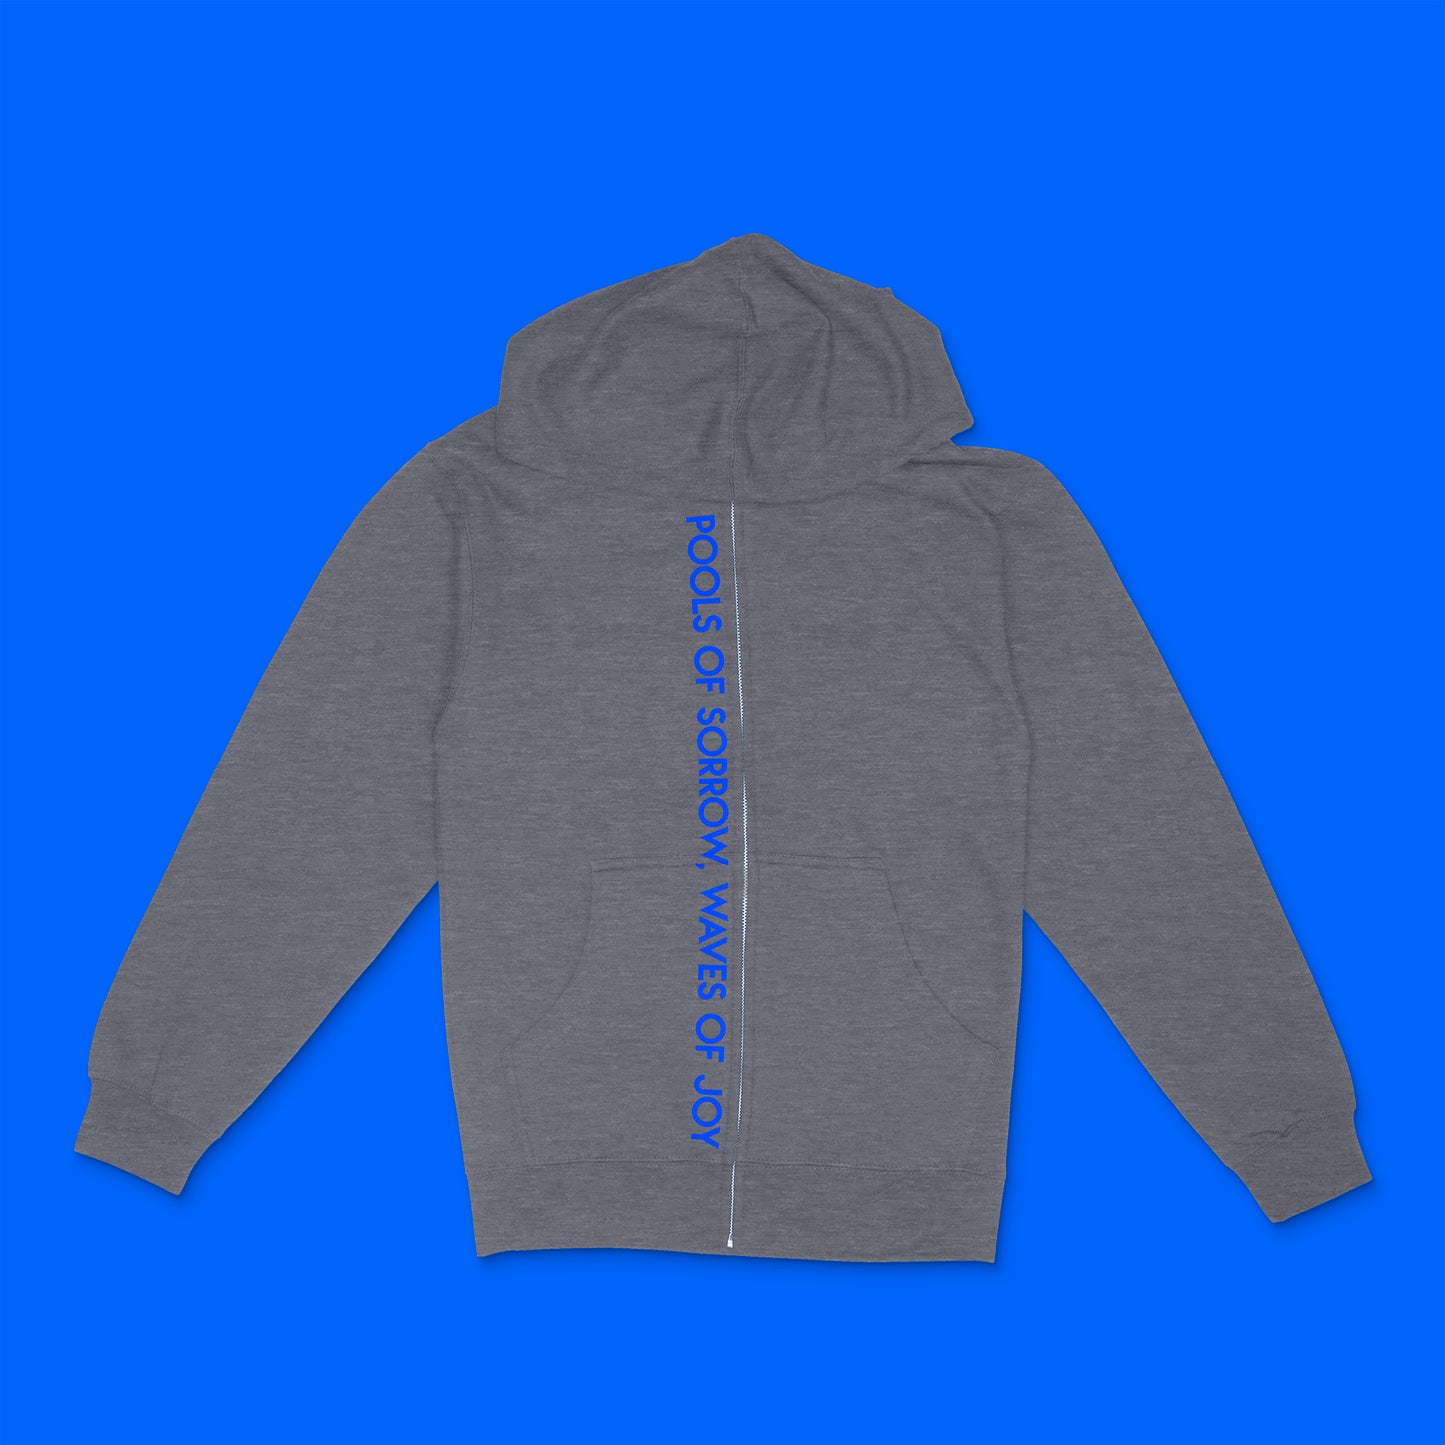 gunmetal heather unisex zip hoodie with custom sample text "Pools of Sorrow, Waves of Joy" in neon blue, geometric text style along zipper of garment  Edit alt text